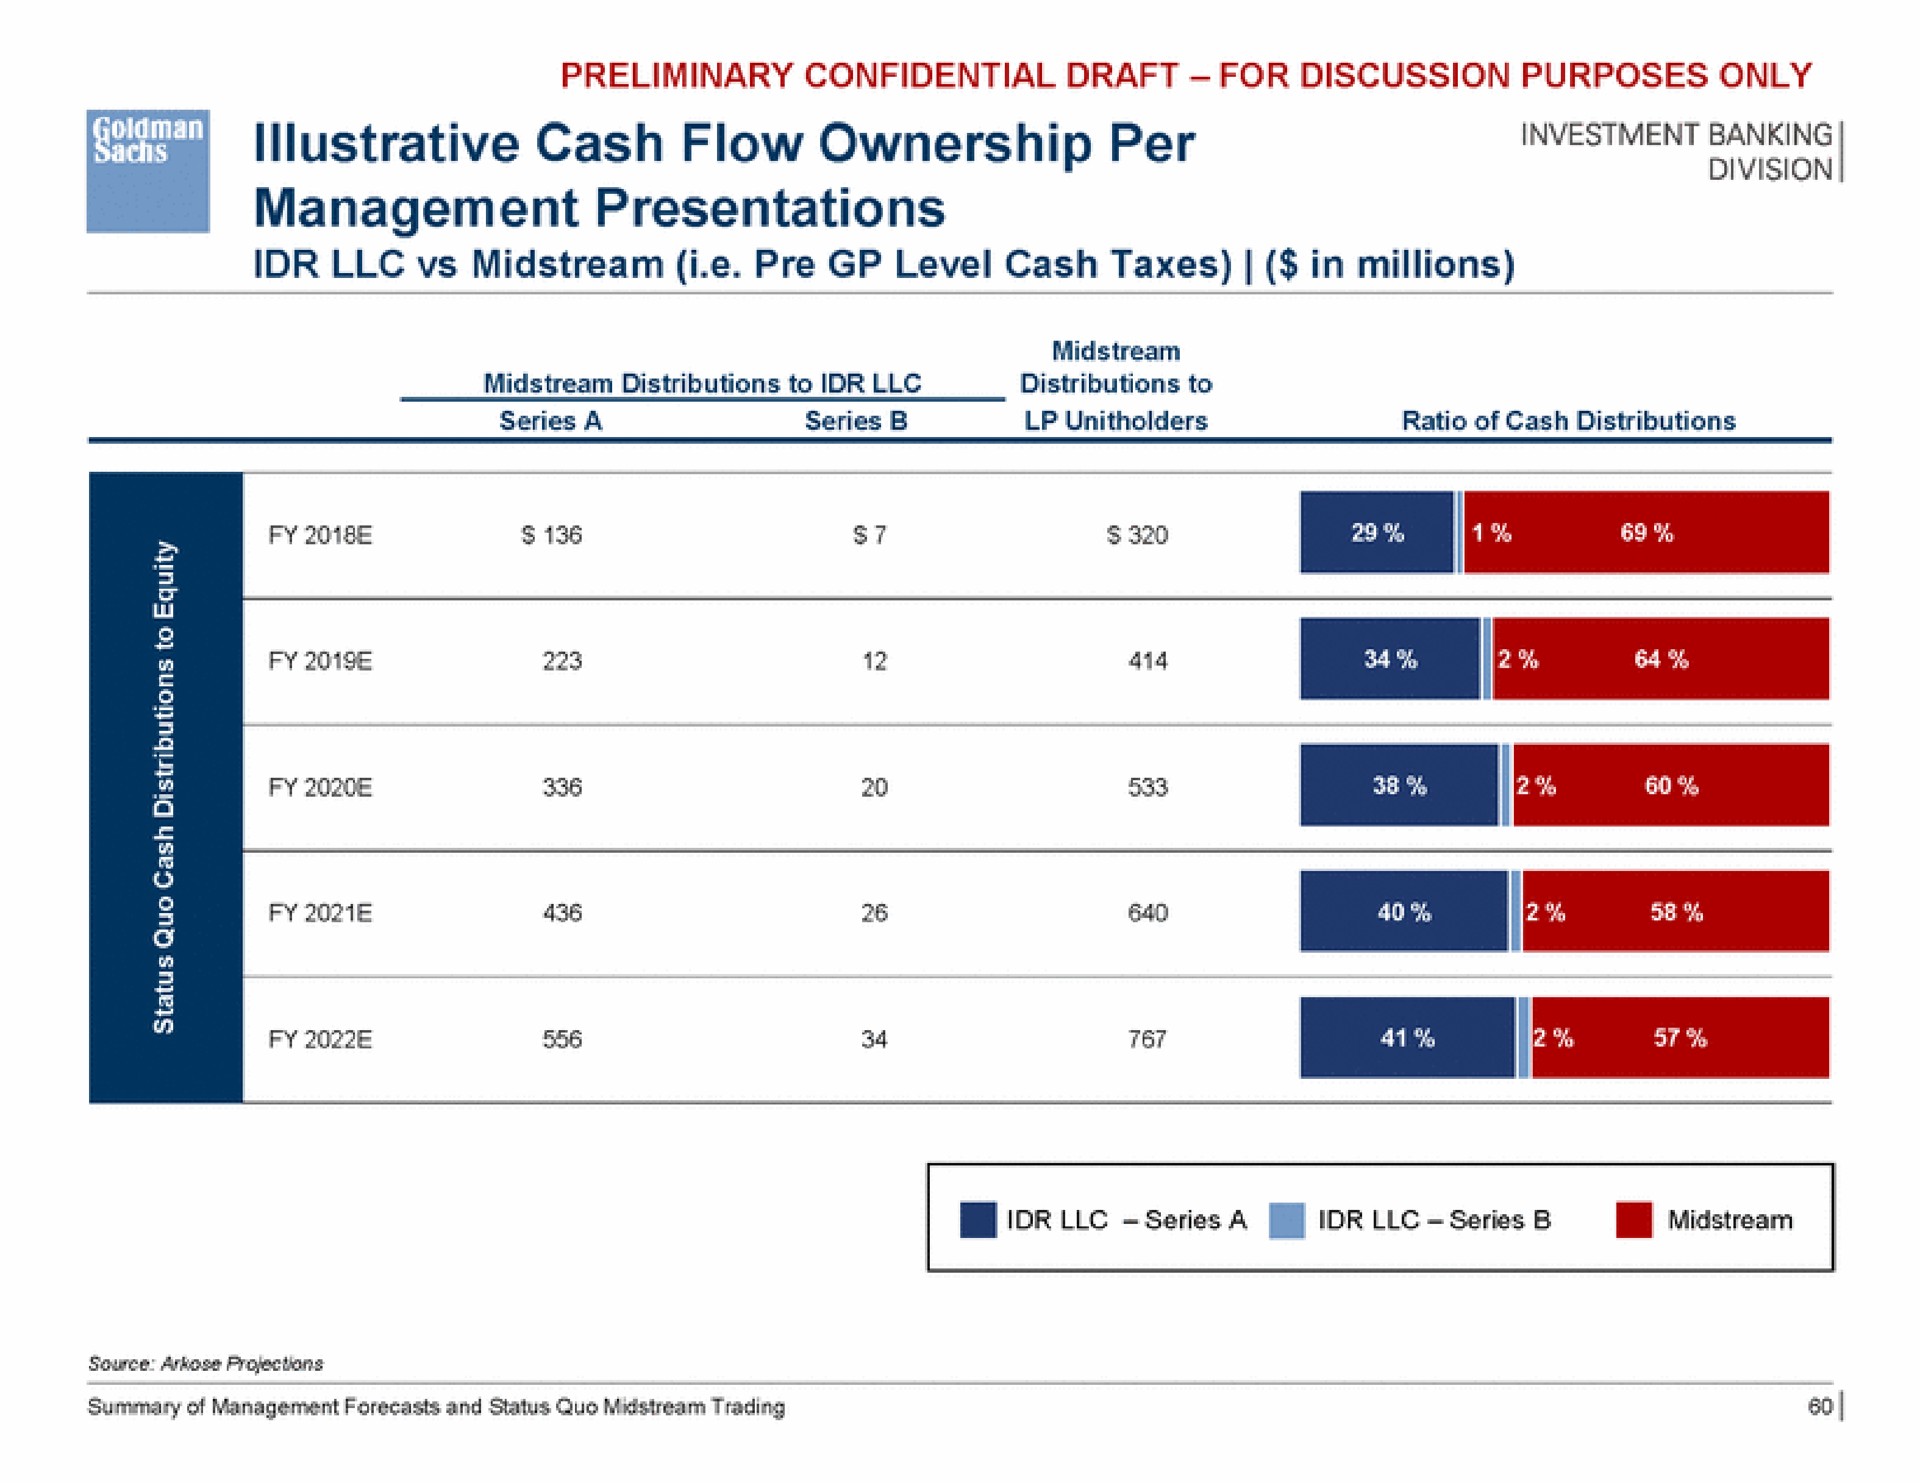 investment banking cash flow ownership per management presentations | Goldman Sachs